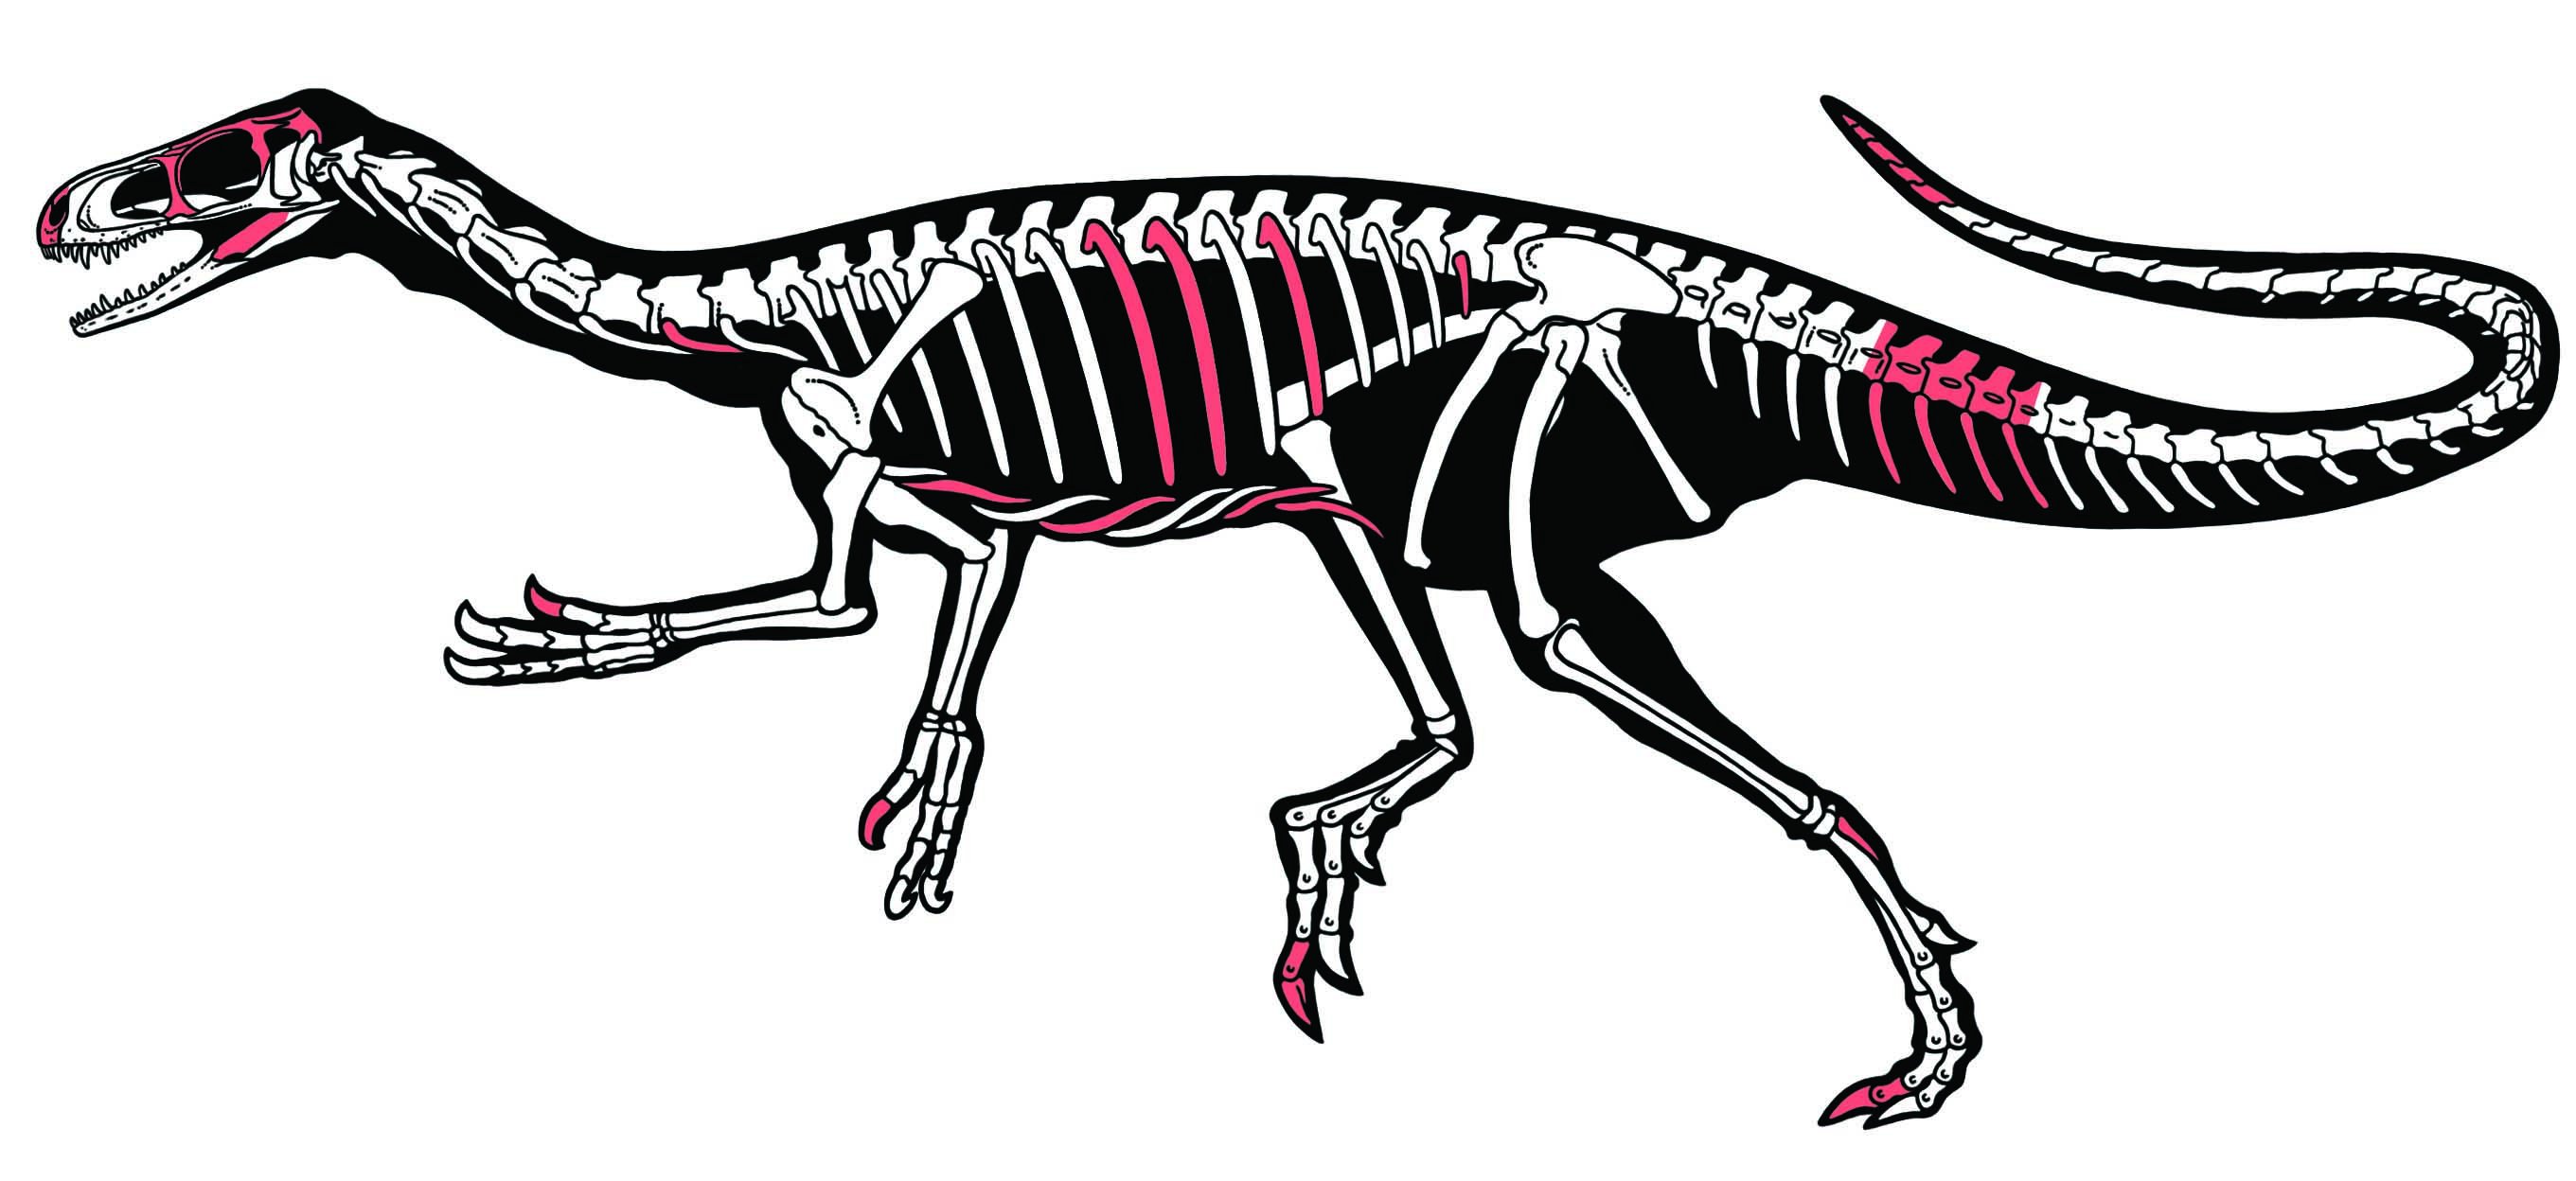 Раскраска Скелет динозавра археоптерикса